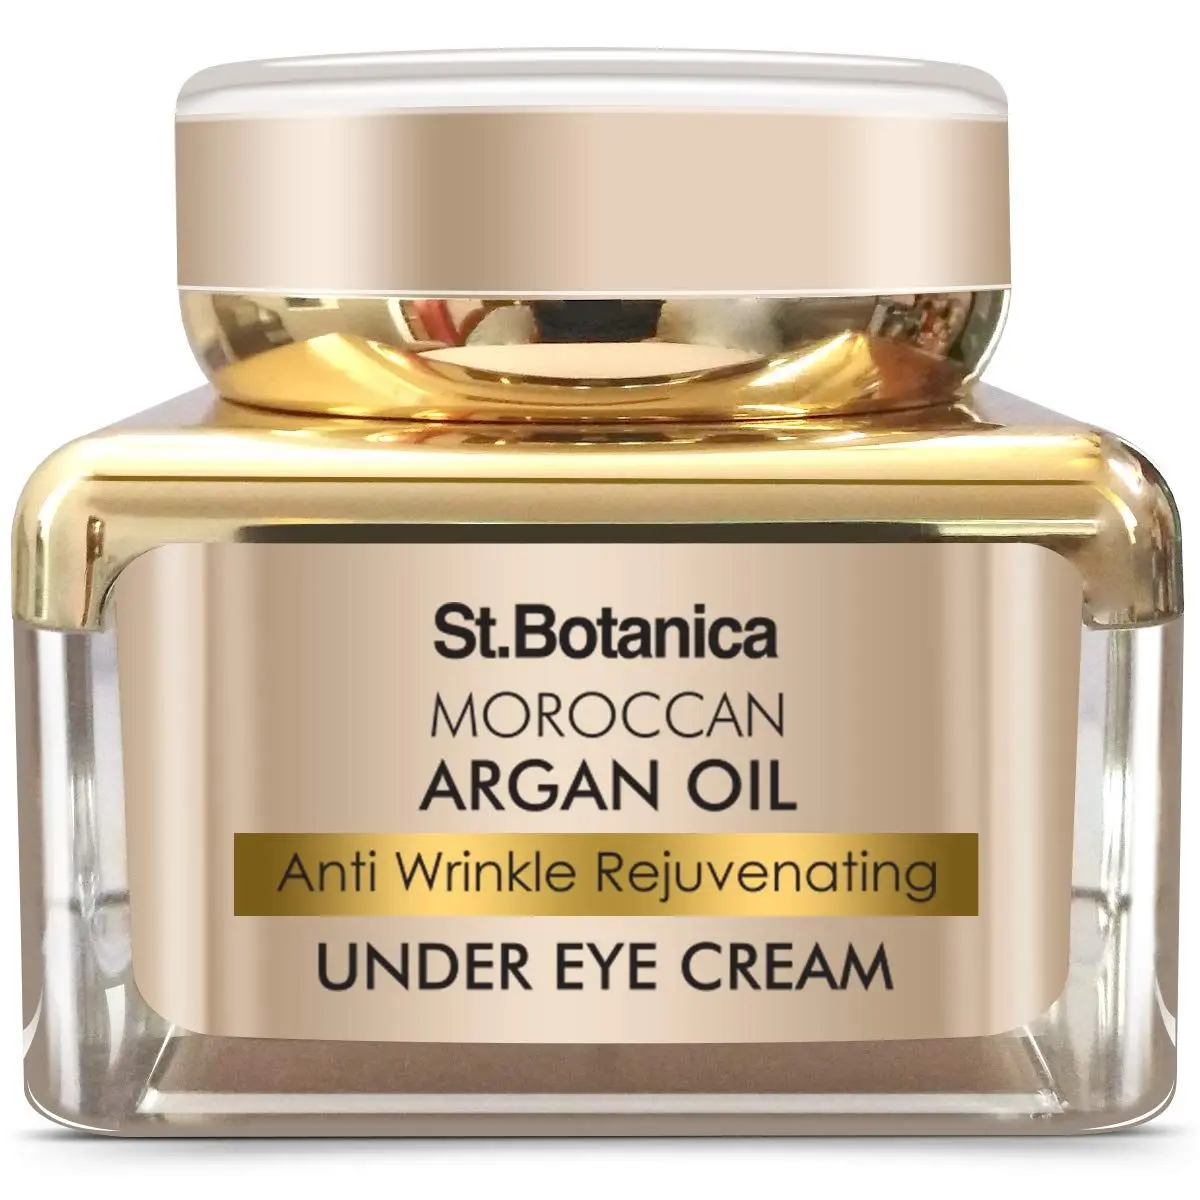 StBotanica Argan Oil Anti Wrinkle Under Eye Cream 30g